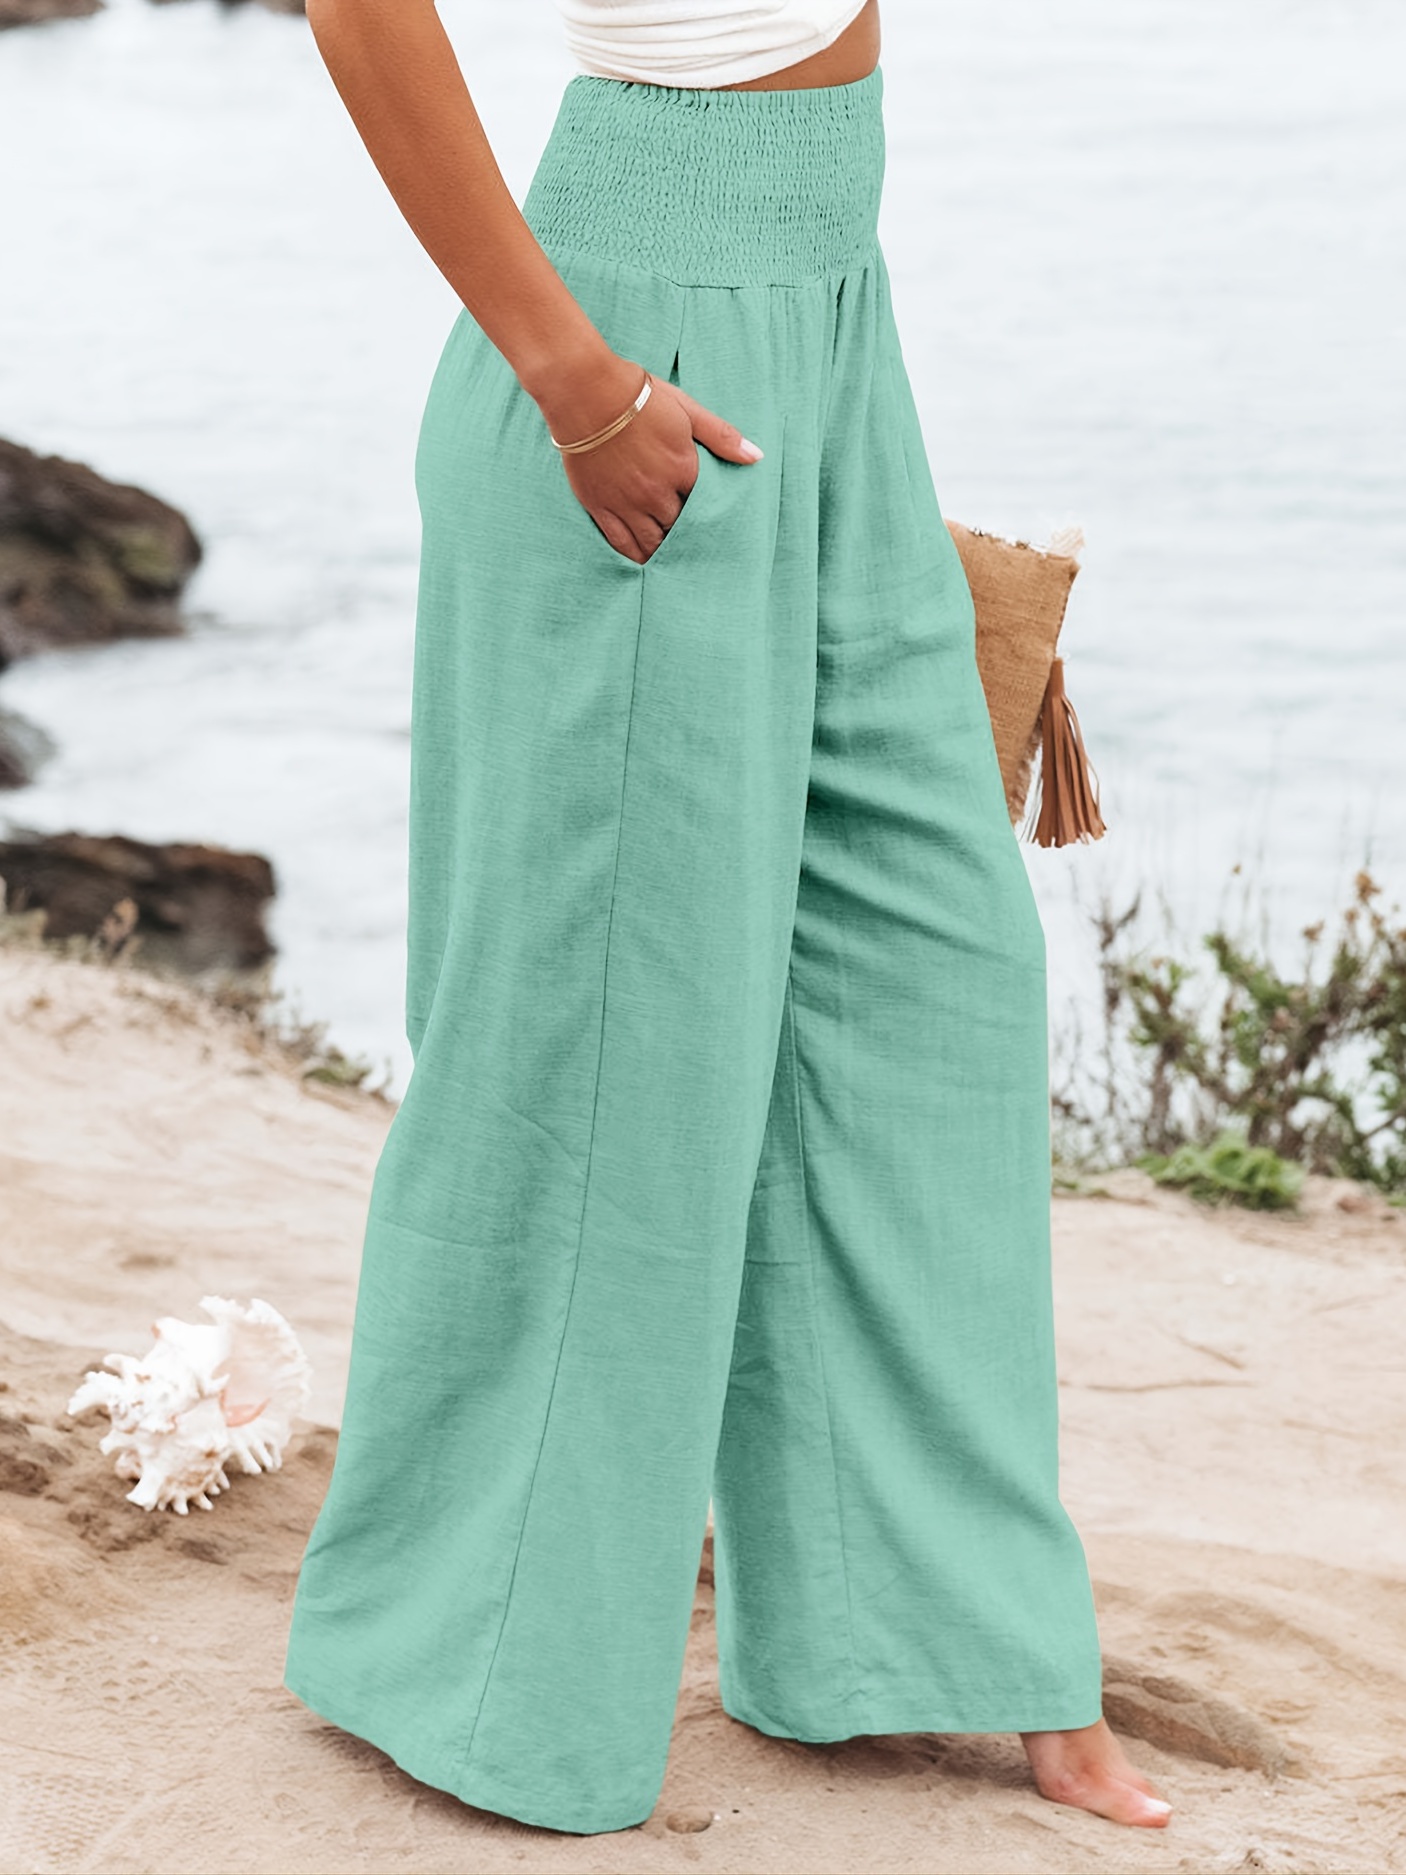 Capri Pants for Women Casual Summer Drawstring Elastic High Waist